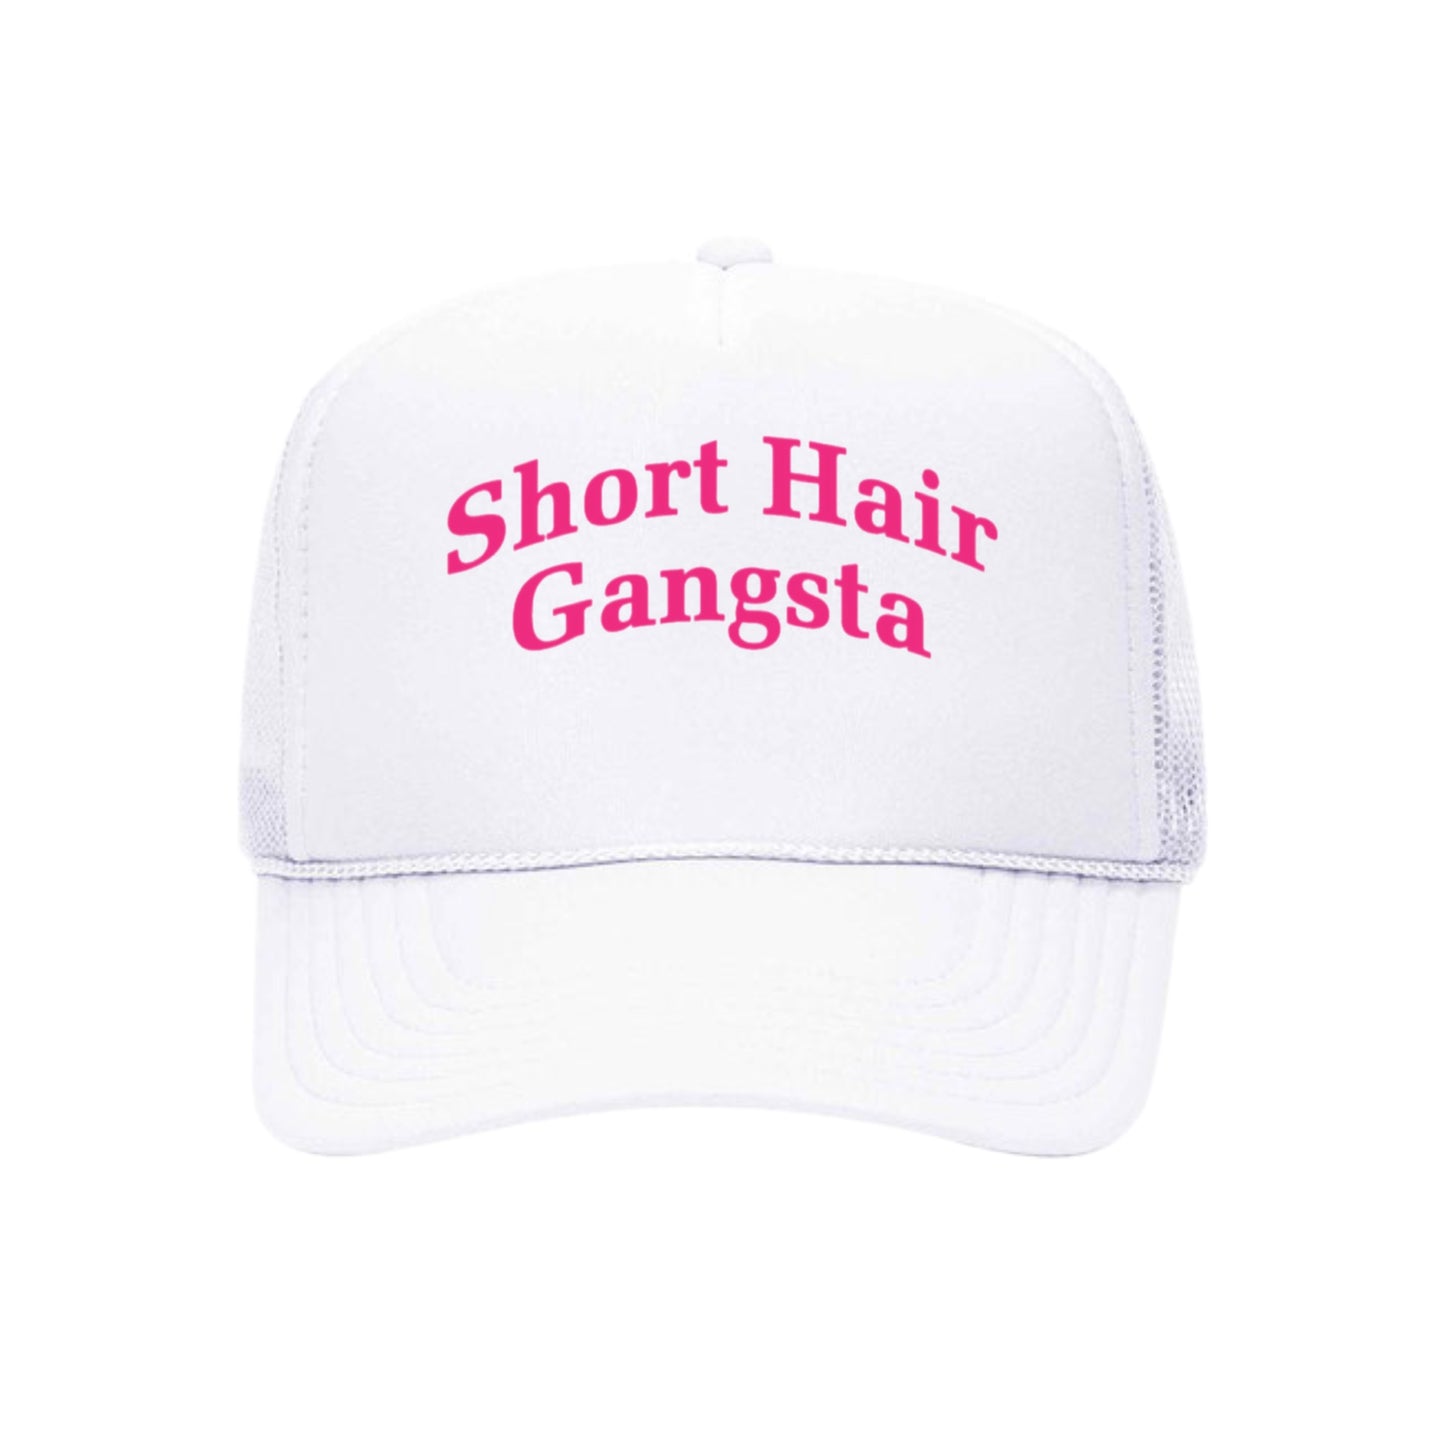 Short Hair Gangsta Trucker Hat (Pink)